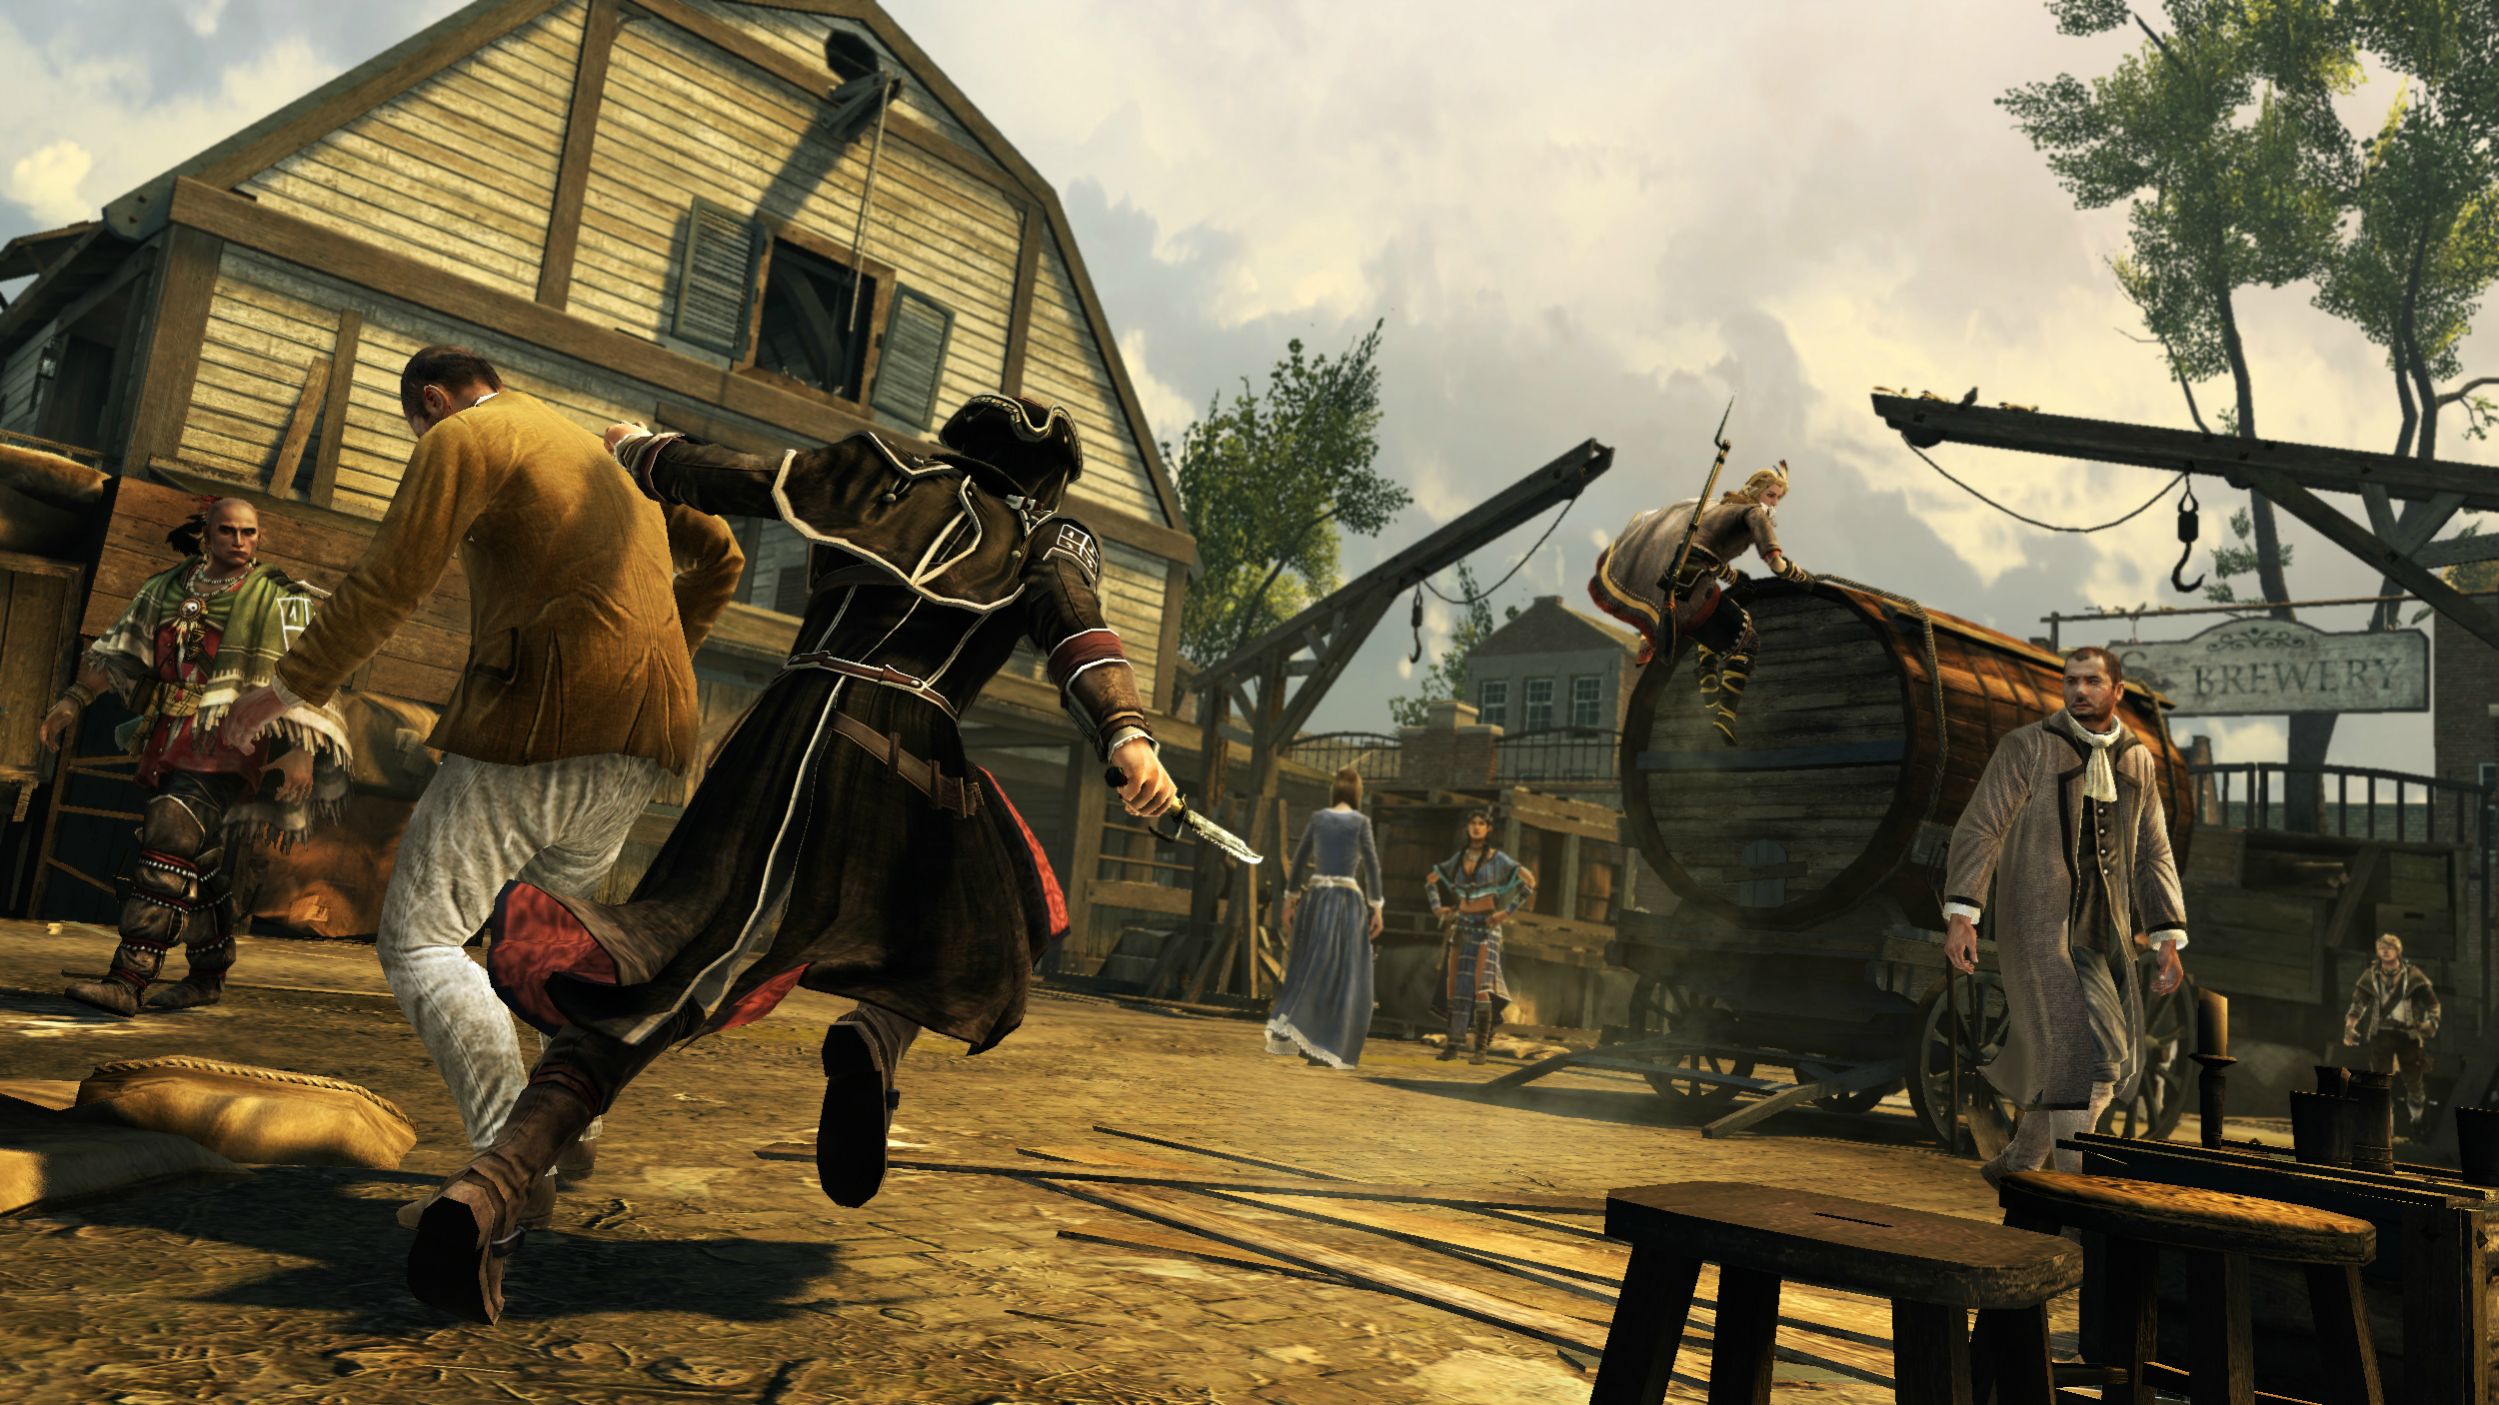 Занимающая игра 3. Ассасин Крид 3. Assassin's Creed 3 screenshots. Assassin's Creed 3 мультиплеер. Скриншоты игры ассасин Крид 3.